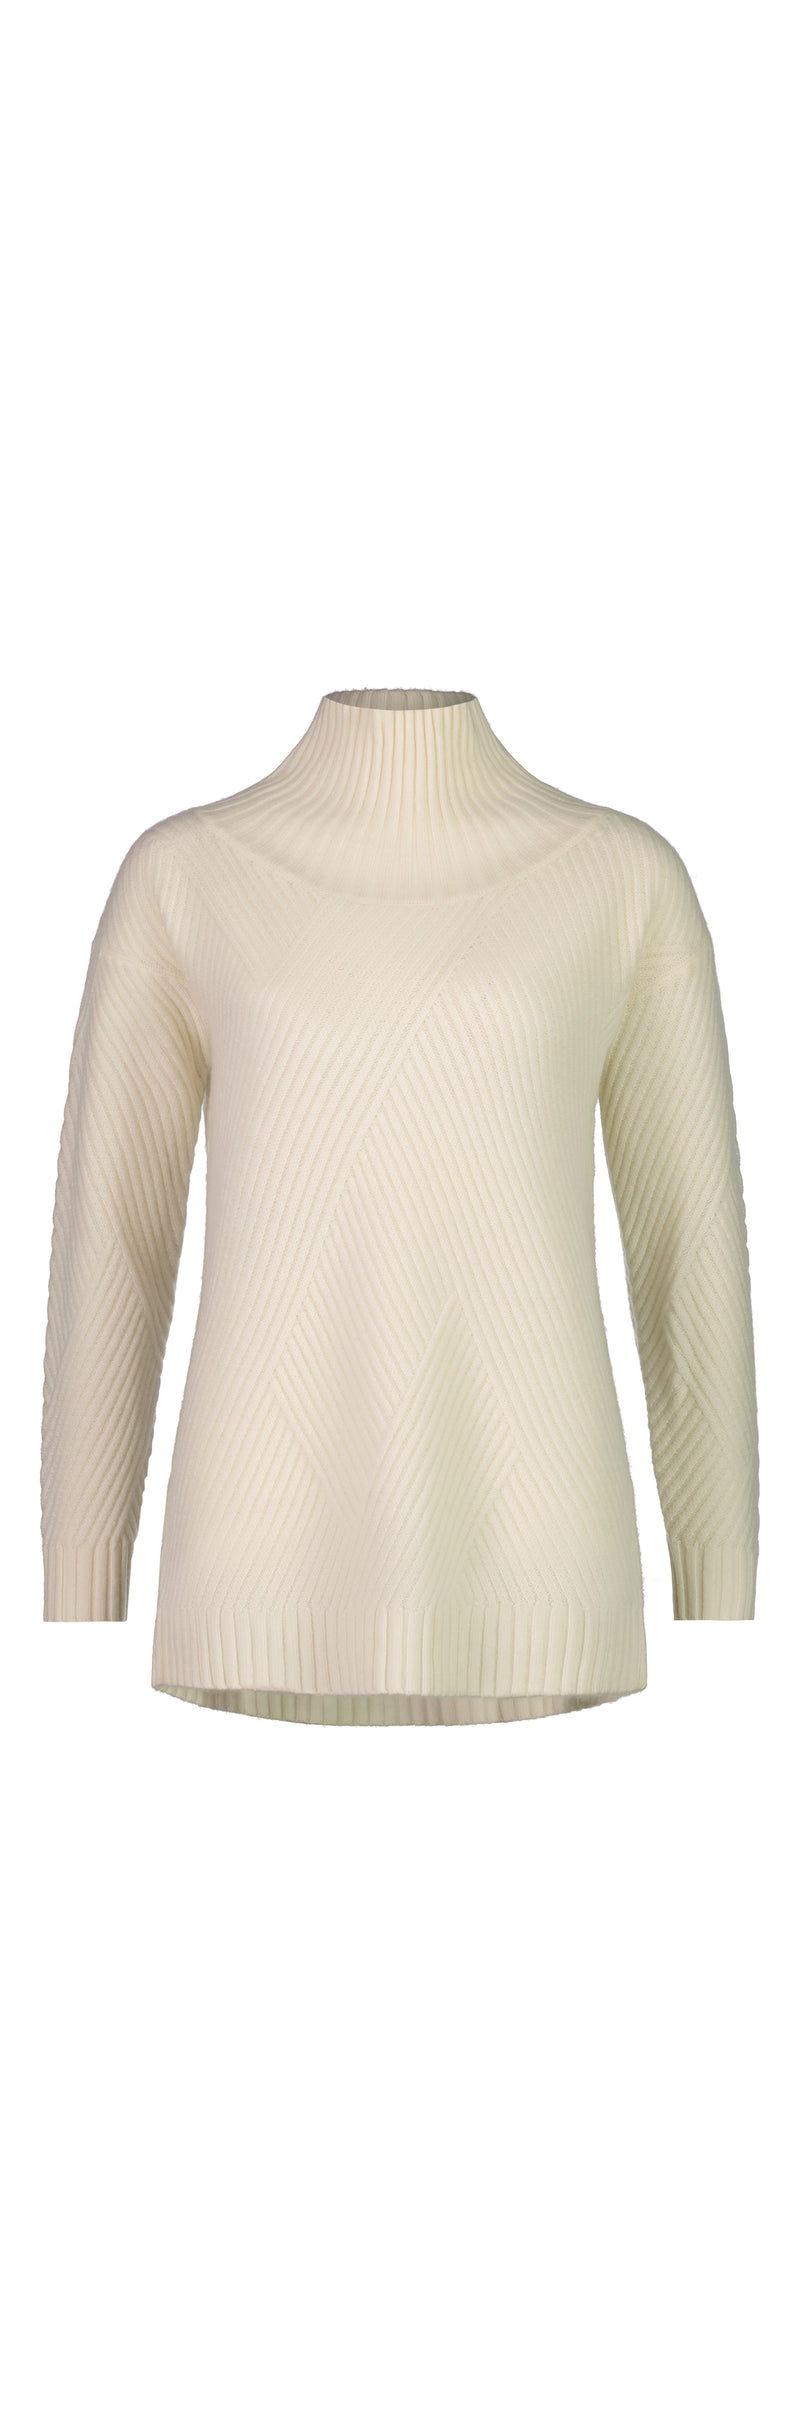 Diagonal Superluxe Cashmere Sweater